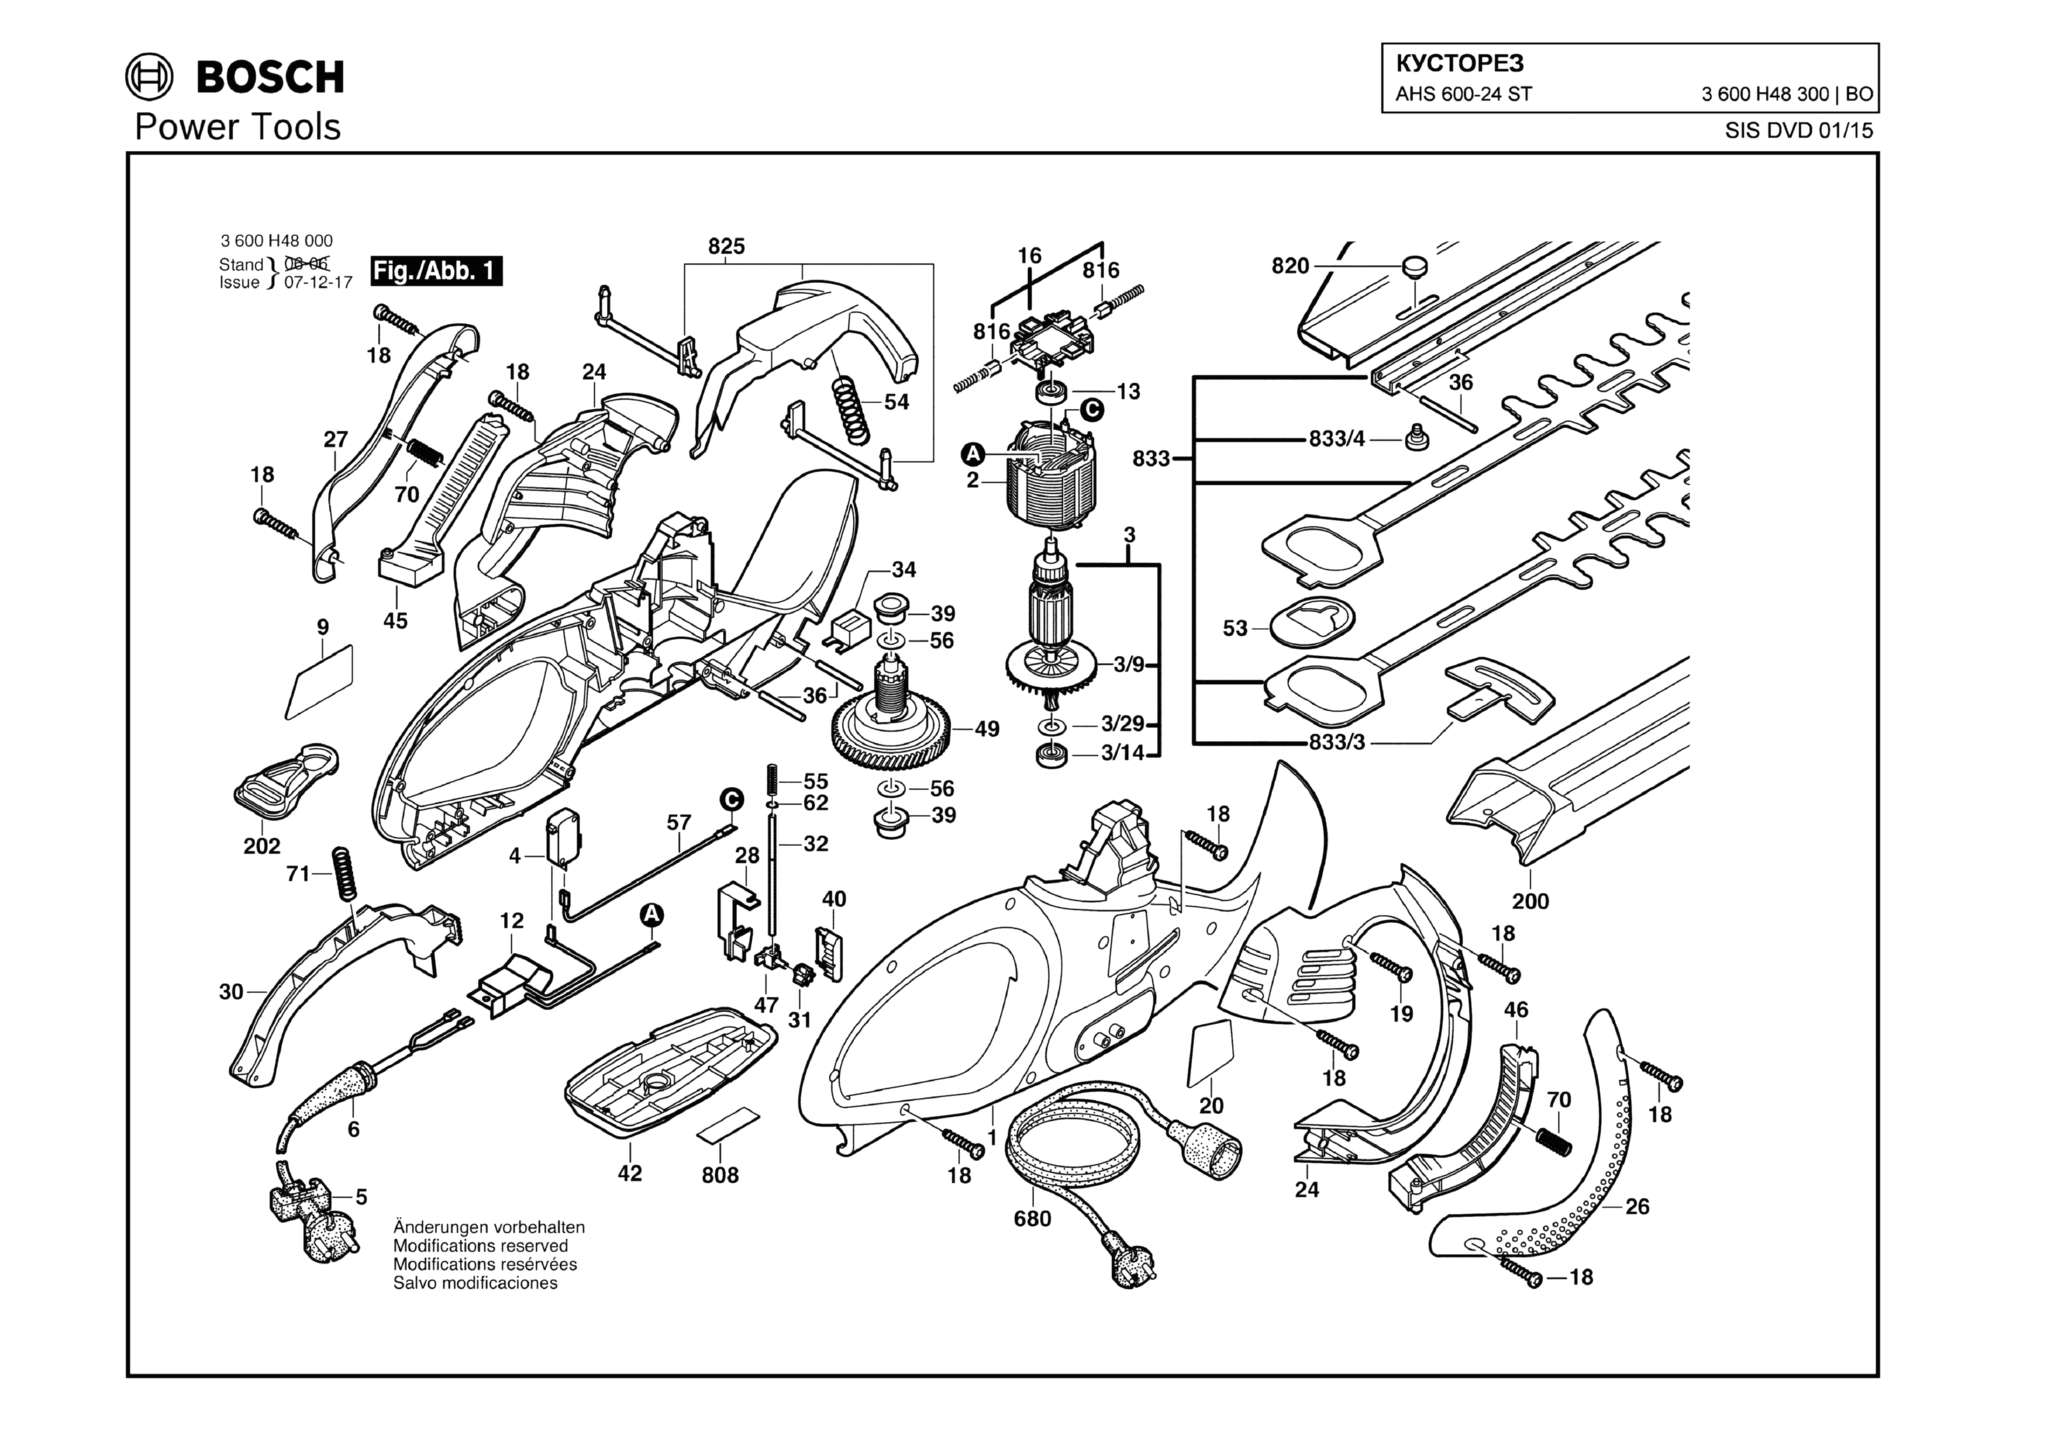 Запчасти, схема и деталировка Bosch AHS 600-24 ST (ТИП 3600H48300)